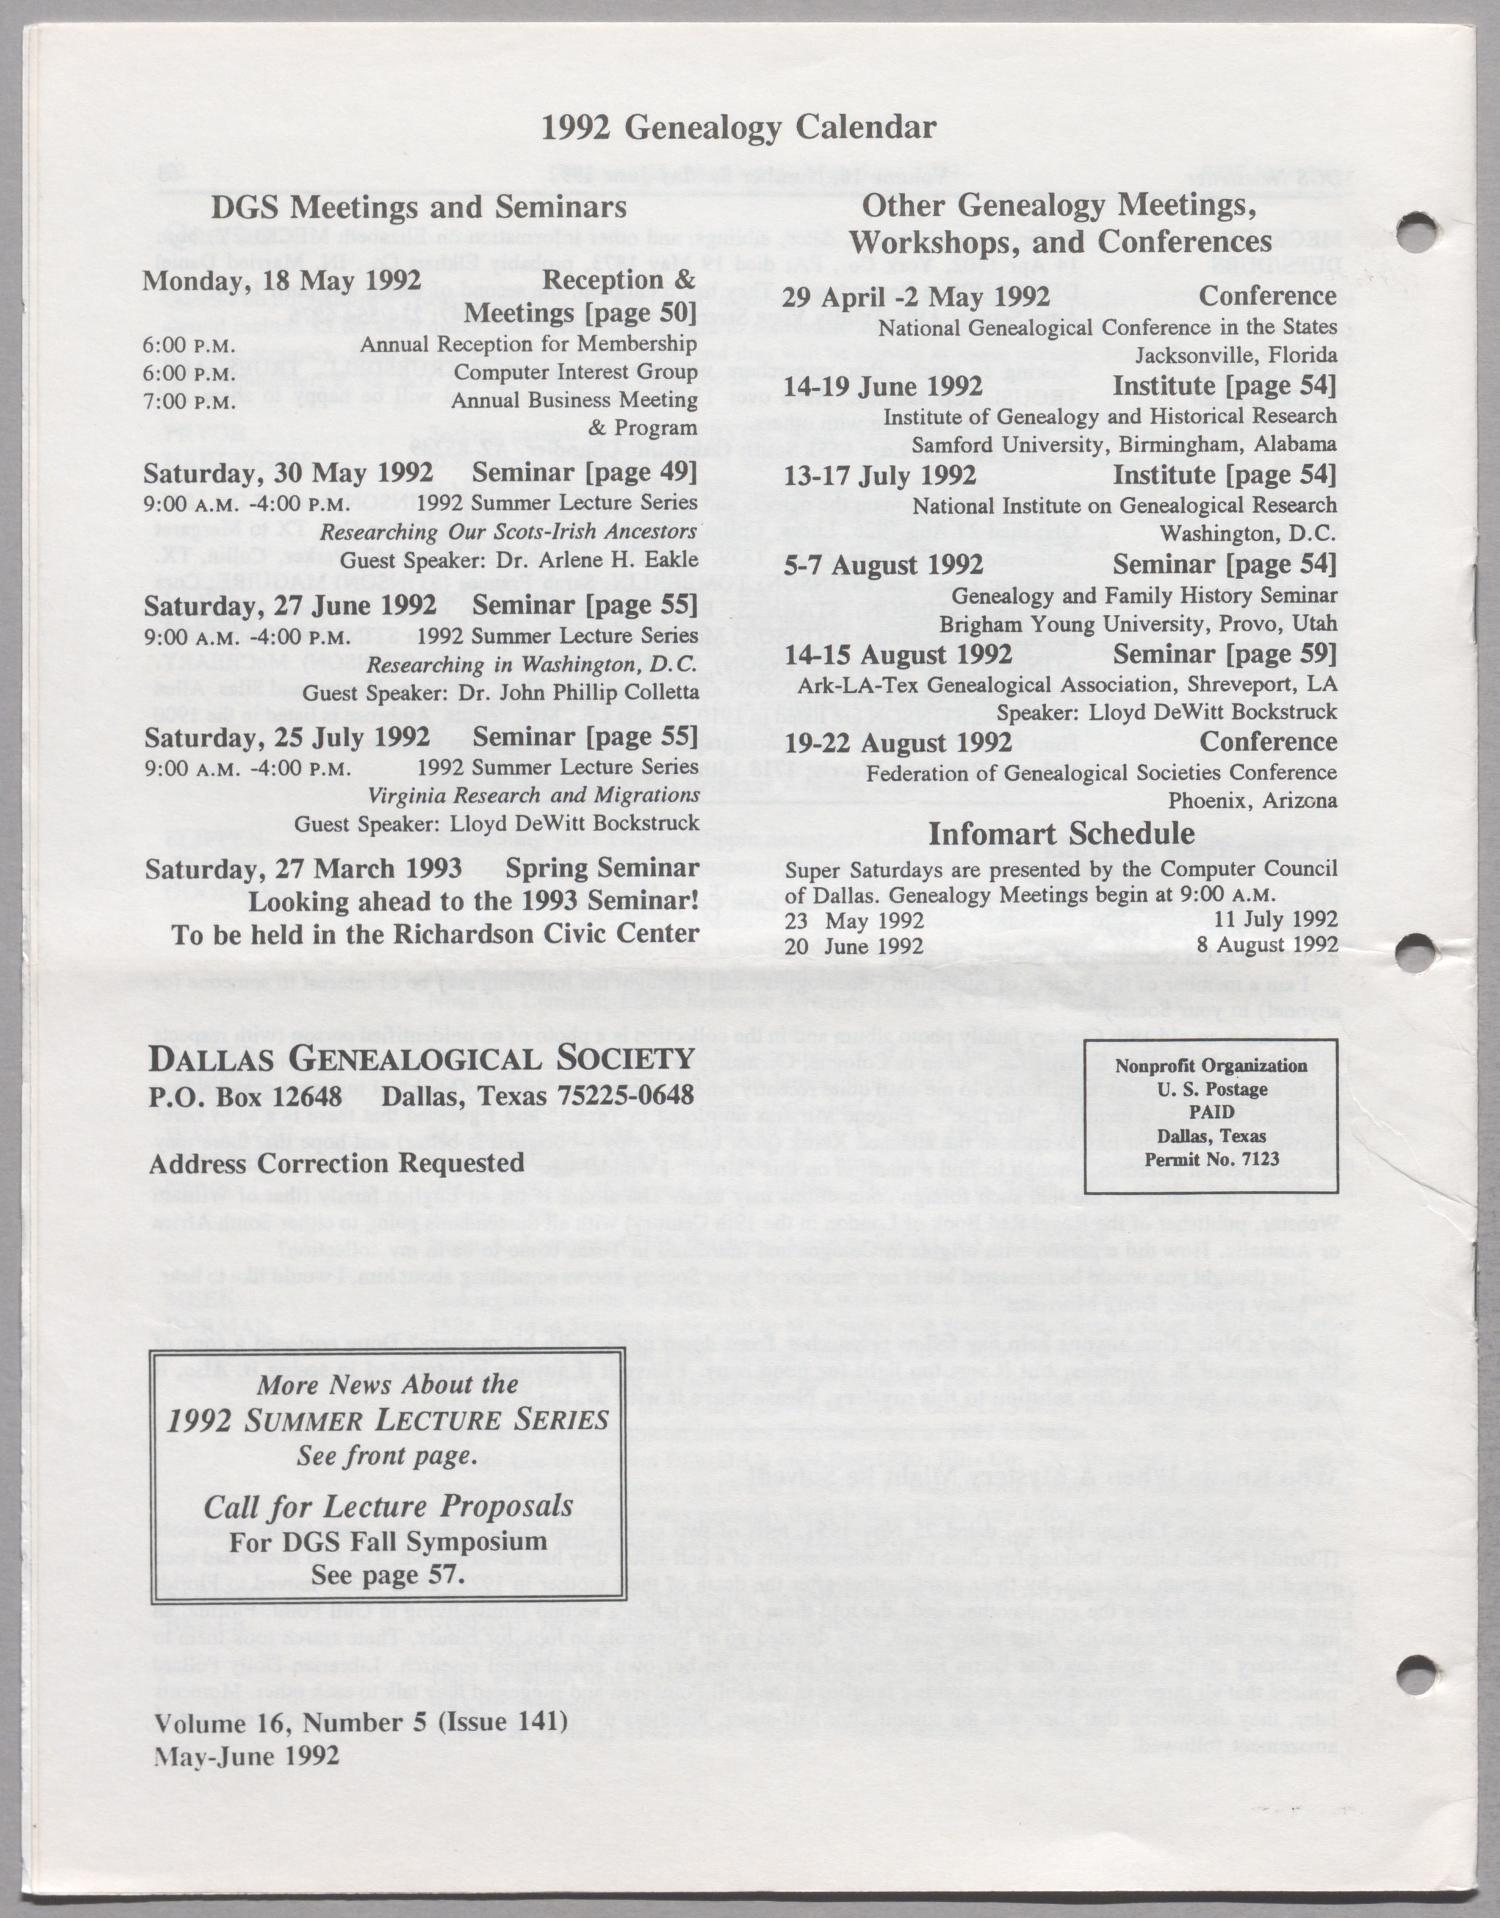 DGS Newsletter, Volume 16, Number 5, May-June 1992
                                                
                                                    64
                                                